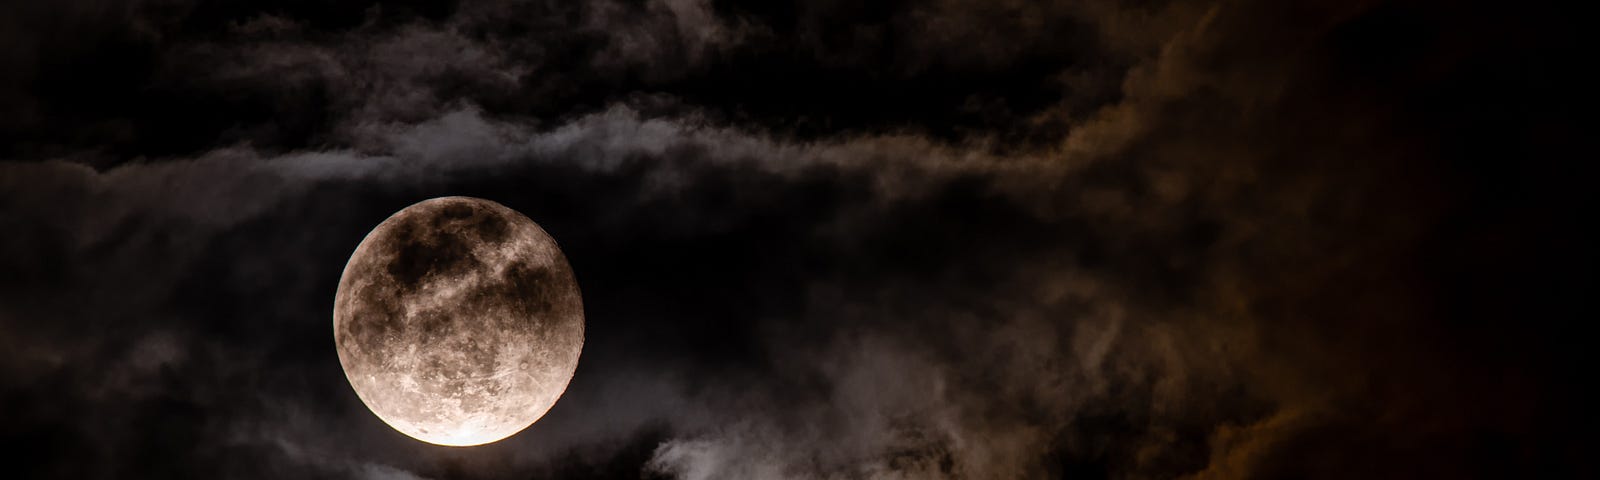 full moon in night sky behind clouds